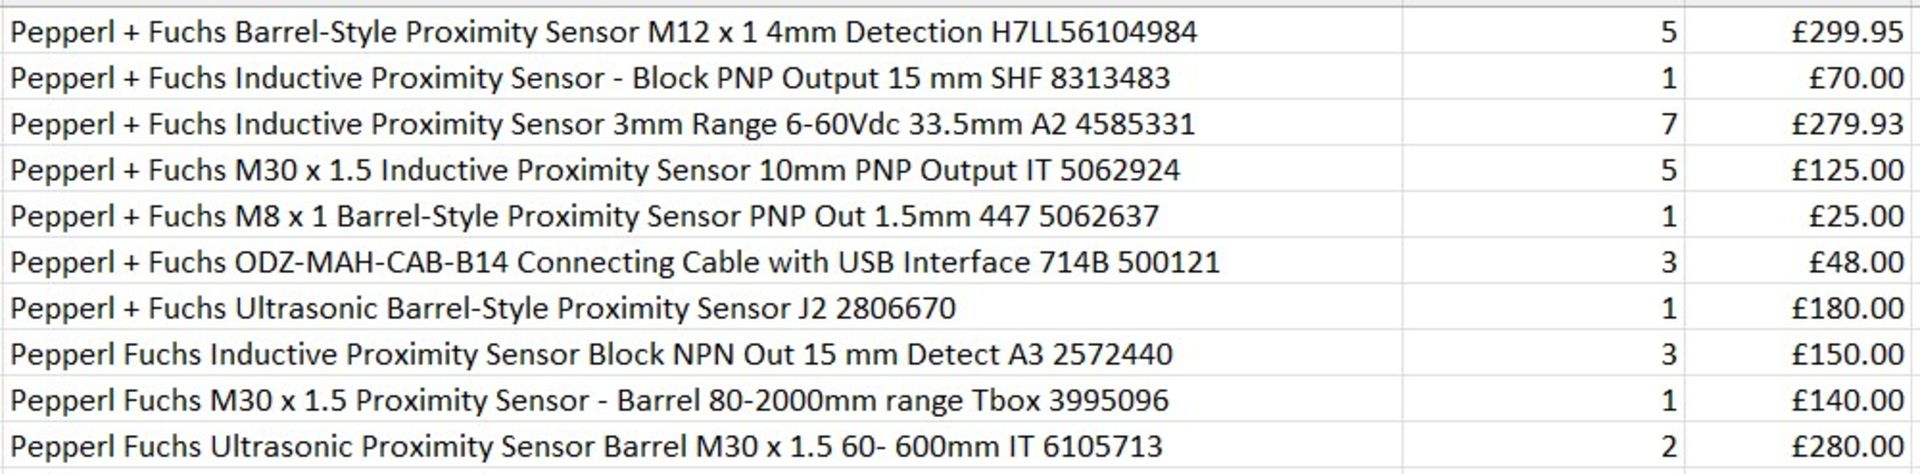 £1.5k worth of Pepperl + Fuchs items across 10 products - proximity sensors etc